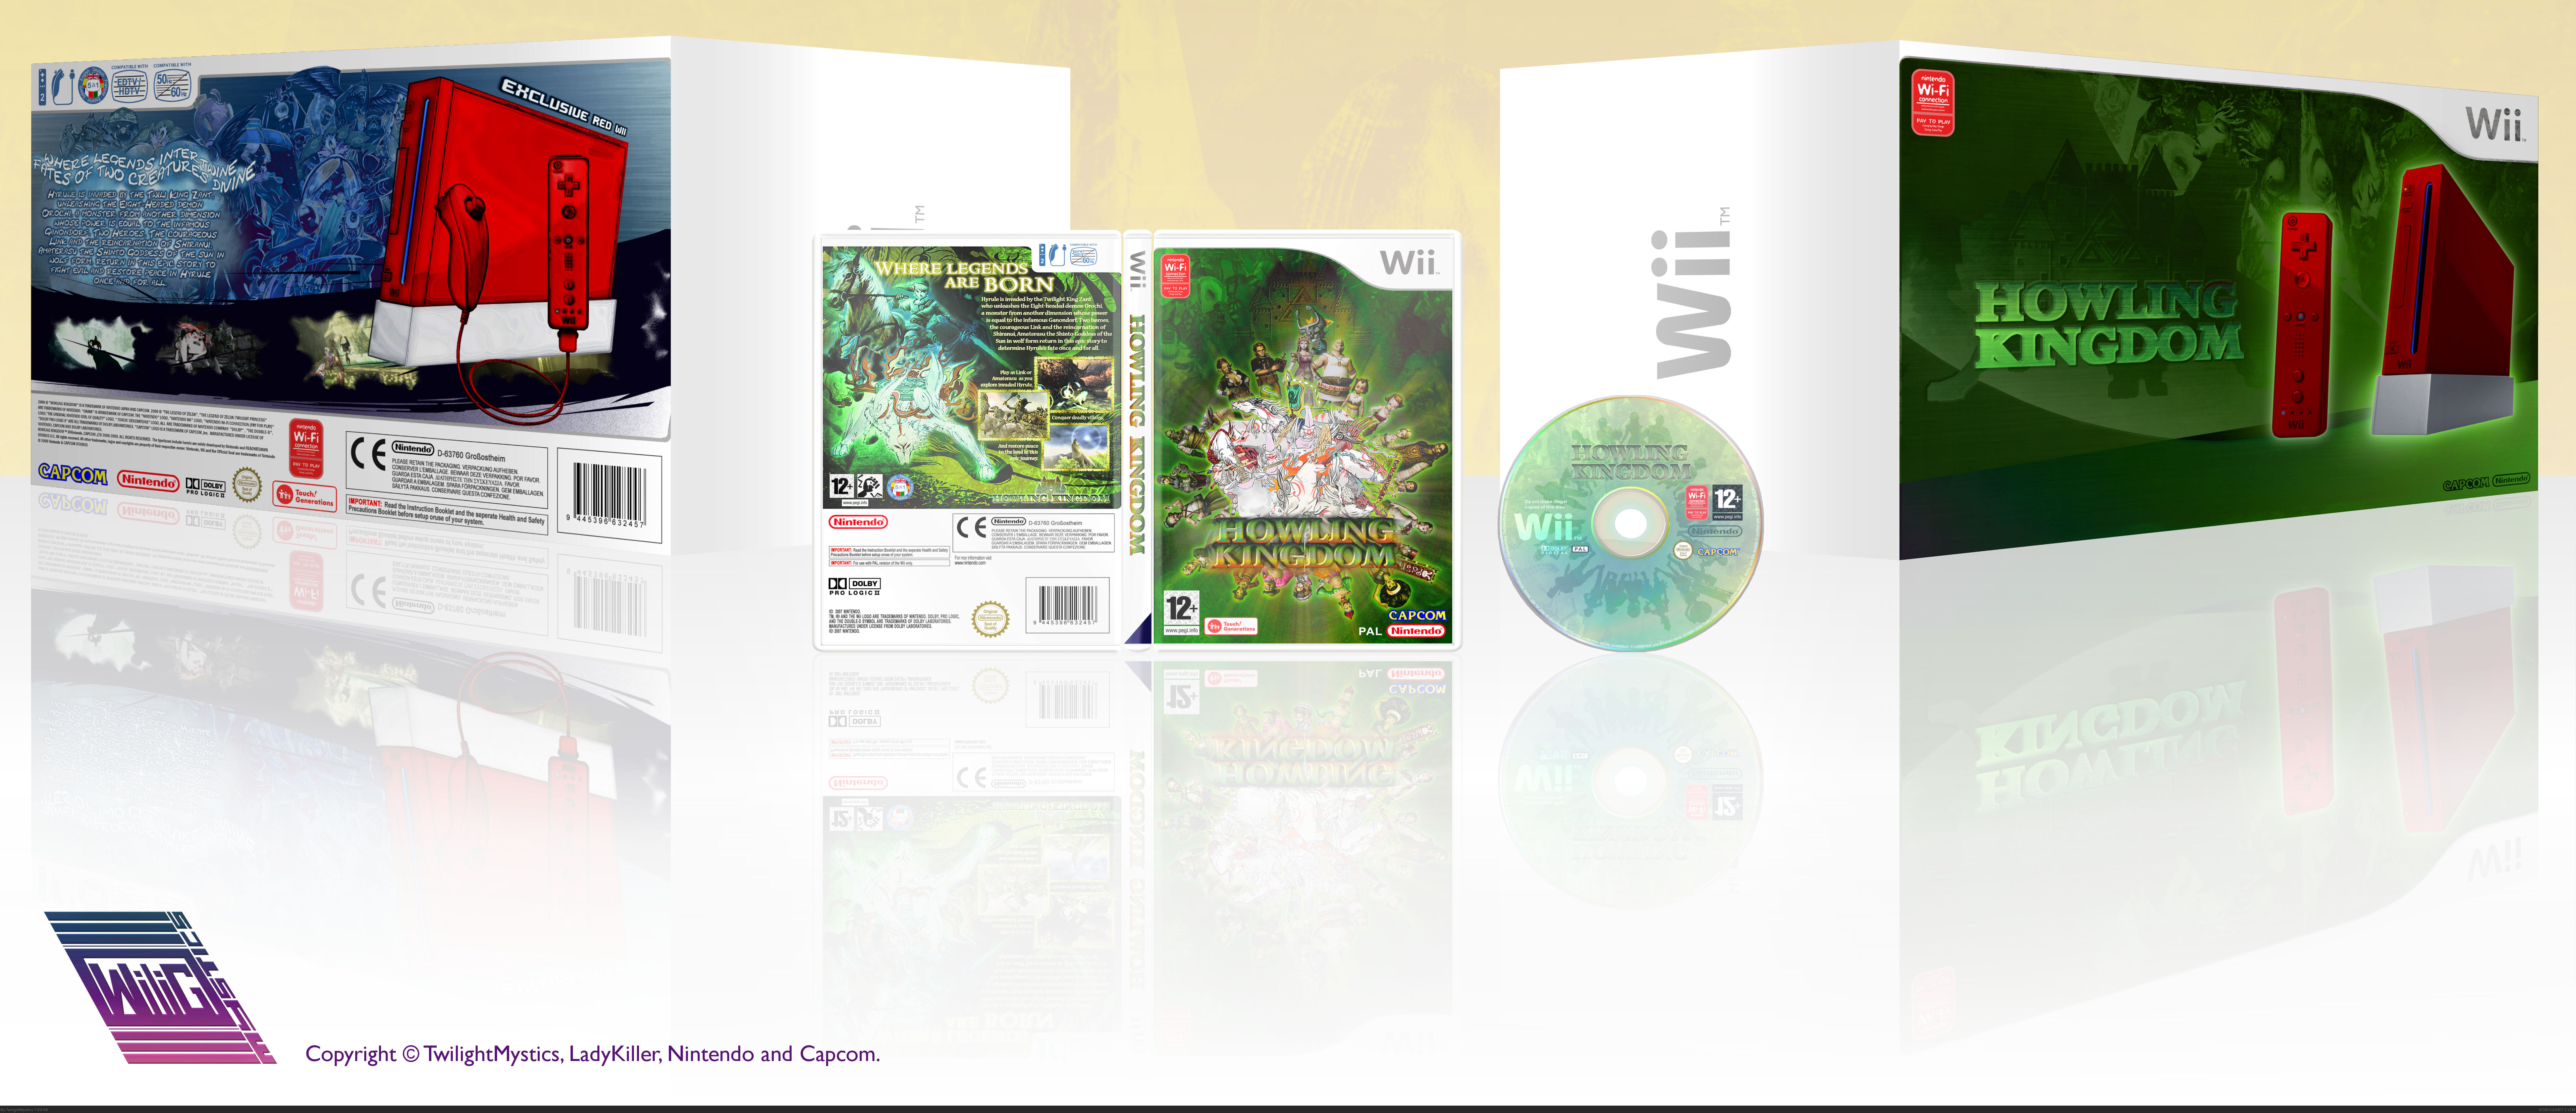 Howling Kingdom ( Inclusive Wii Bundle Boxart) box cover